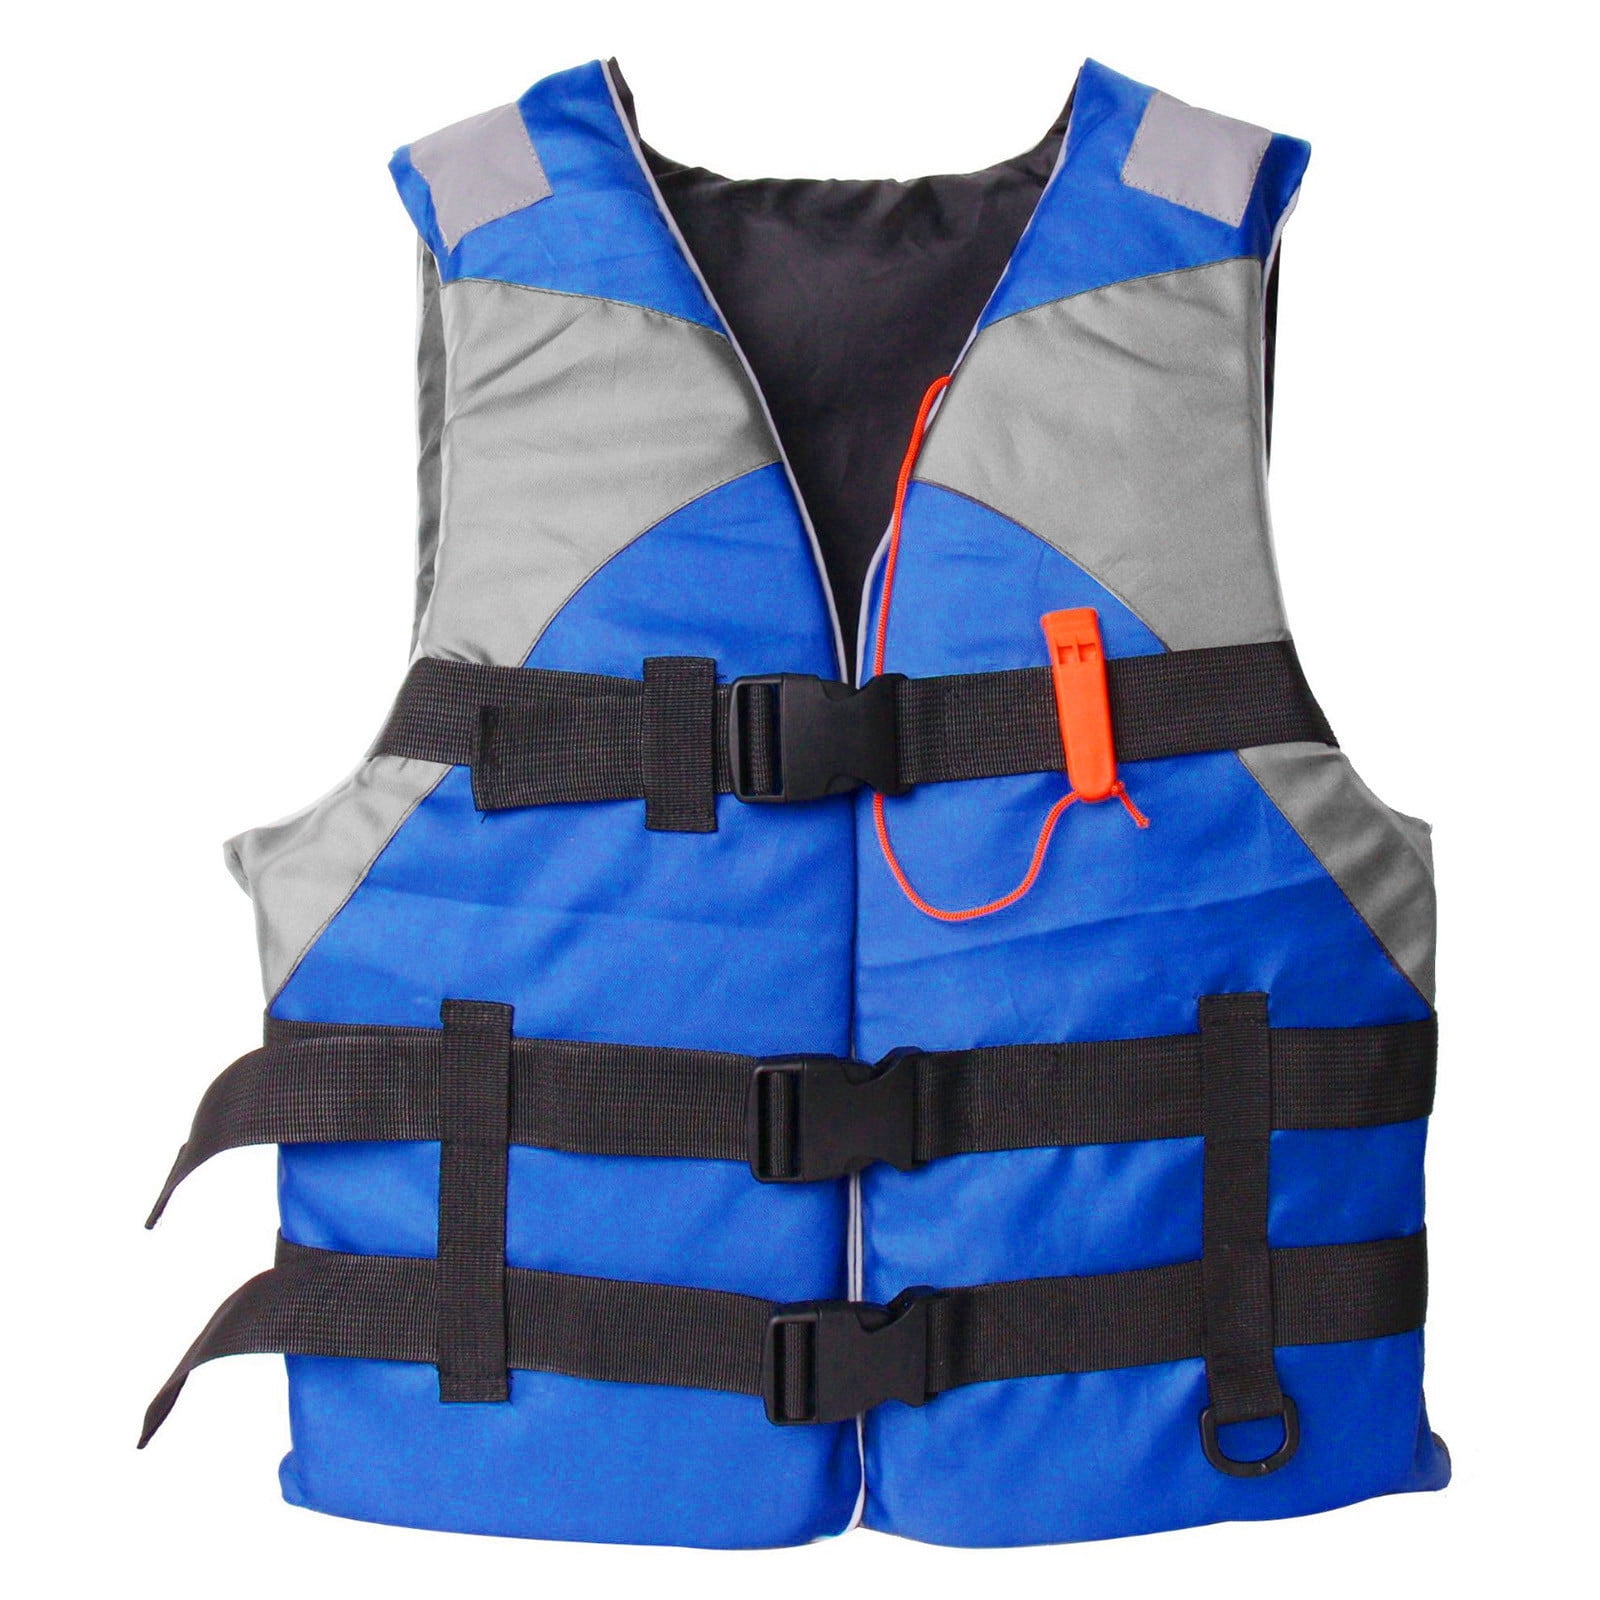 Adults Kids Life Floatation Vest Ski Buoyancy Aid Sailing Jacket Preserver 